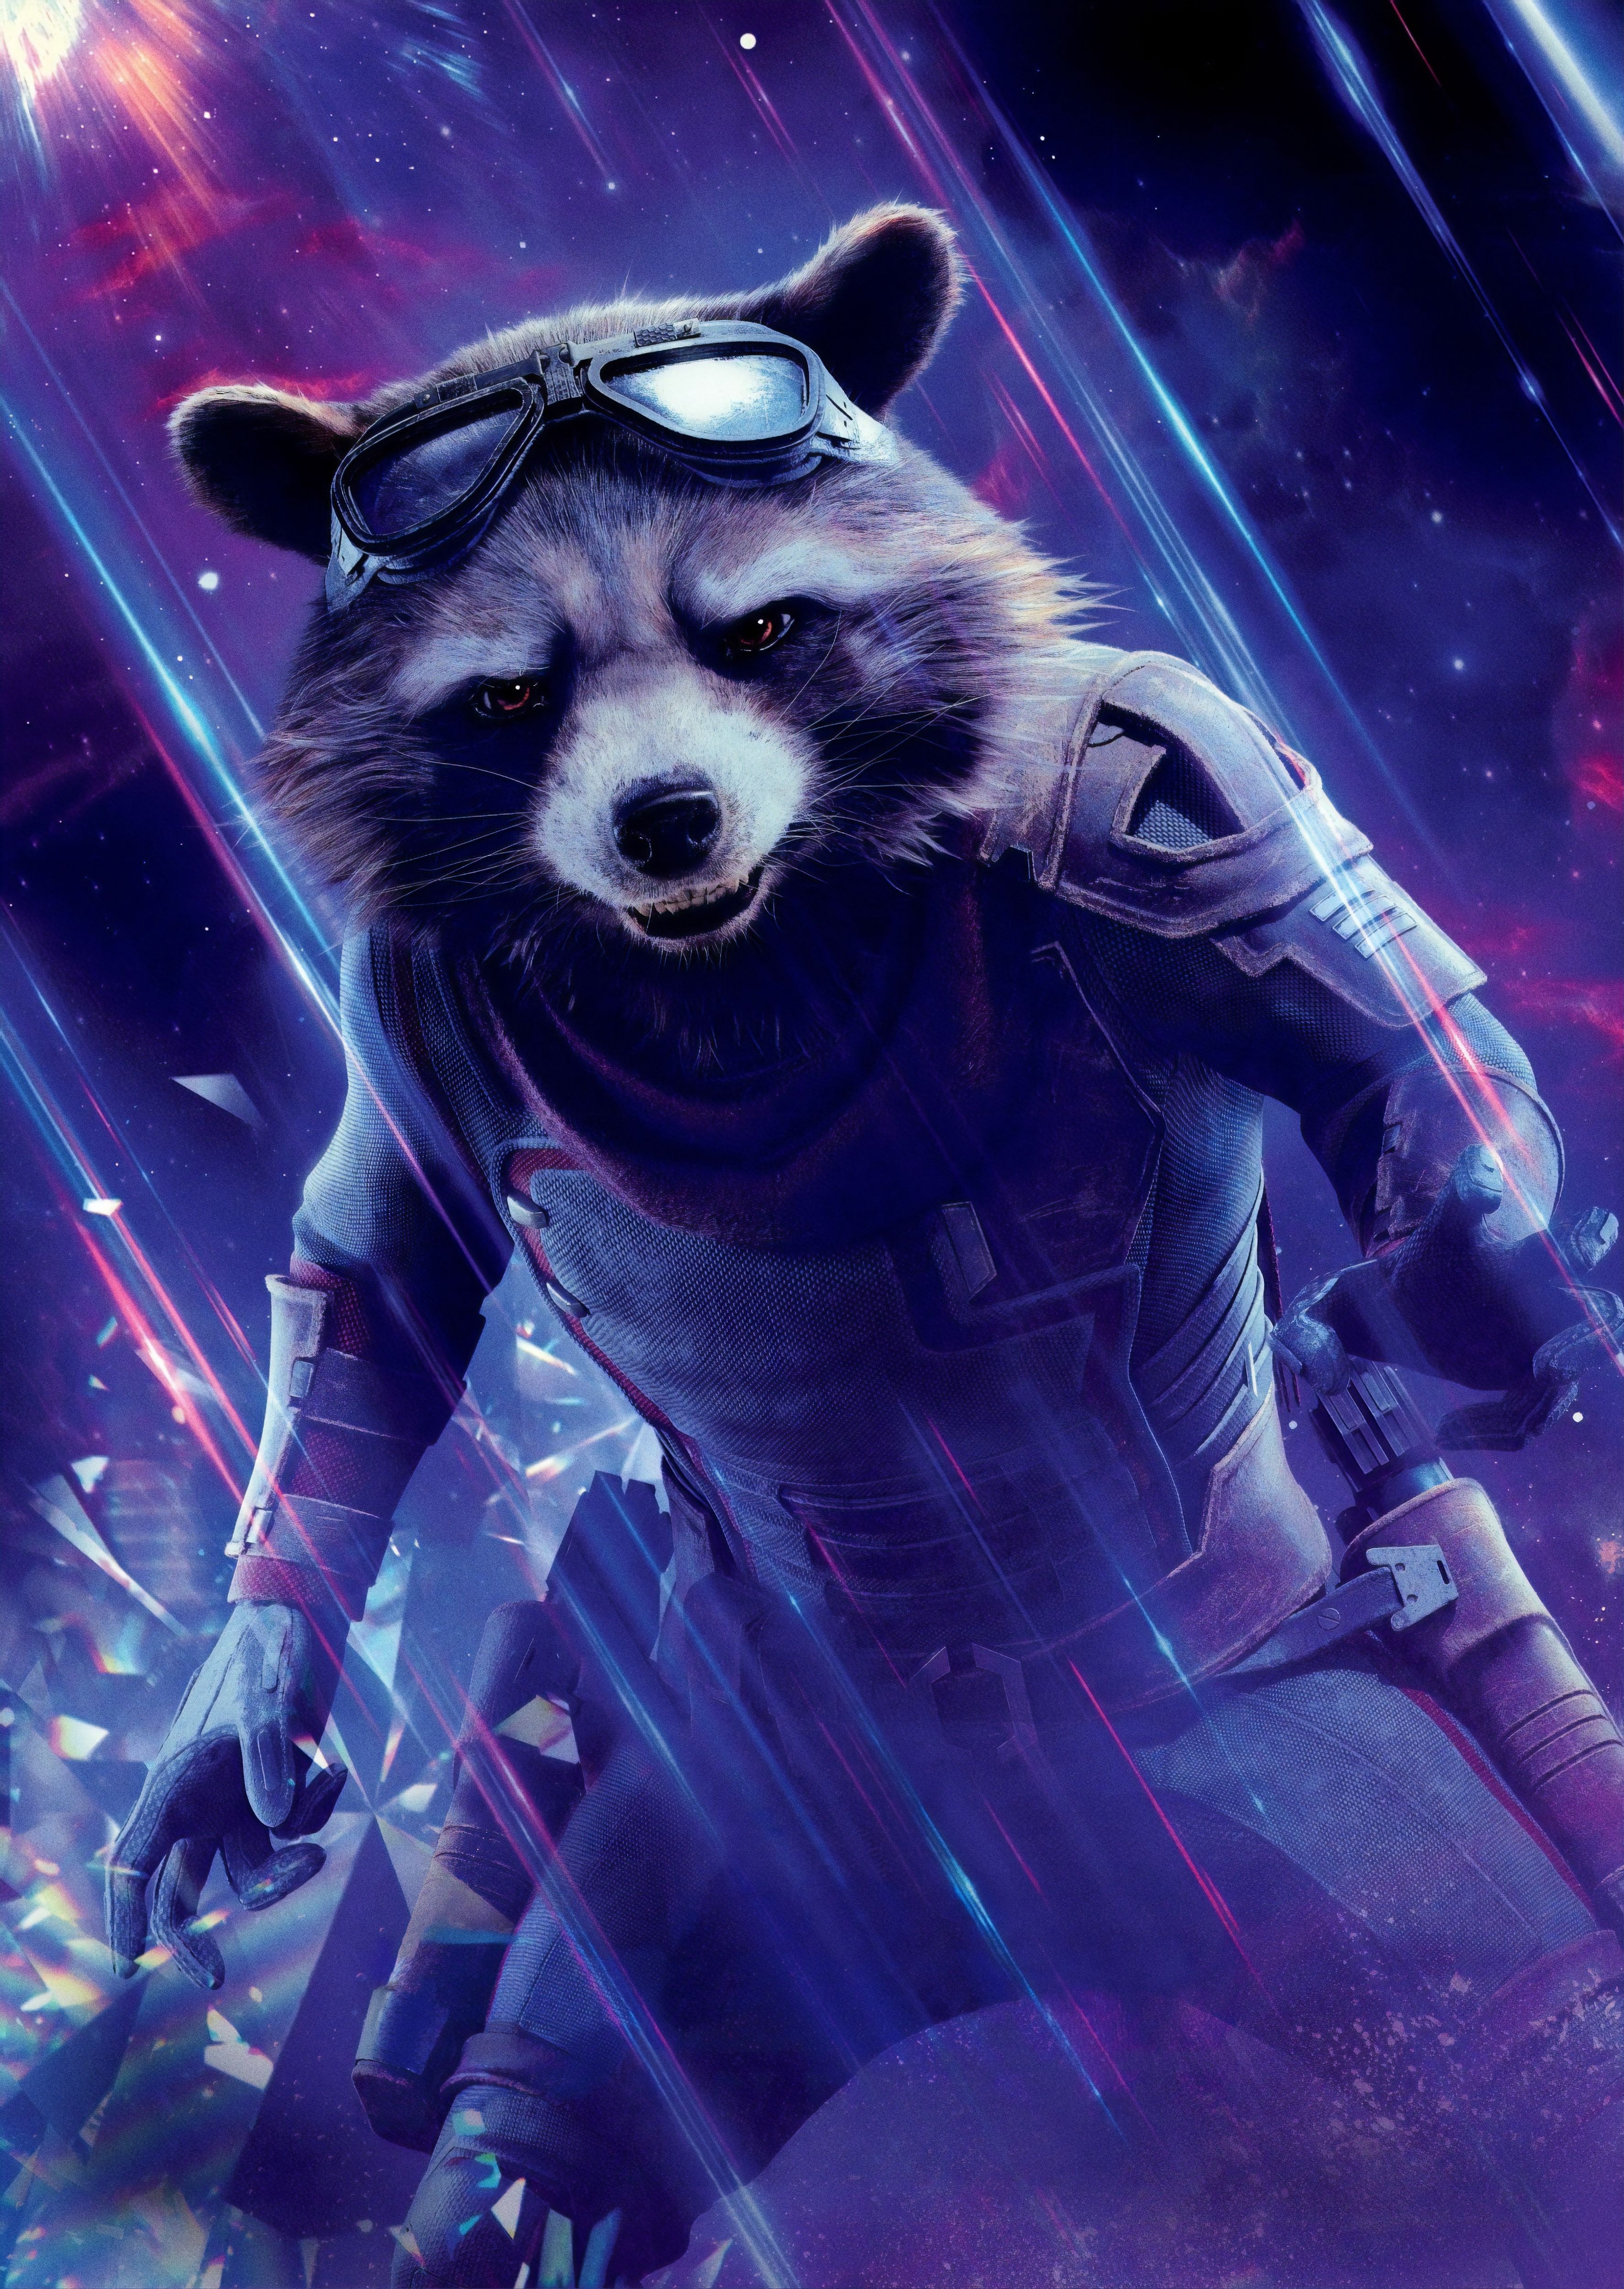 Rocket Raccoon. Marvel Cinematic Universe